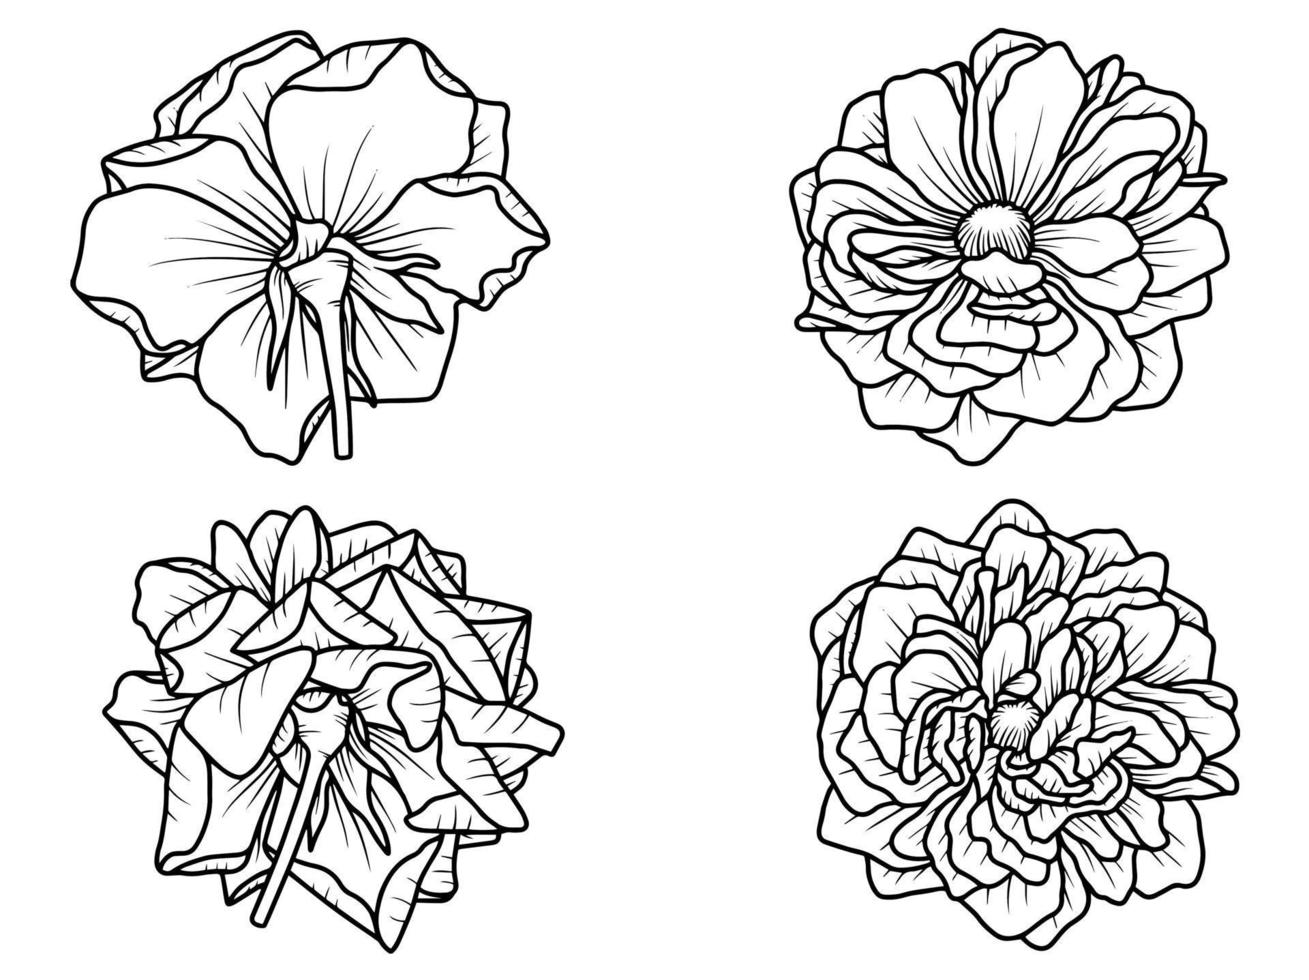 handritad blomma skiss linjekonst illustration. ros linjekonst vektor